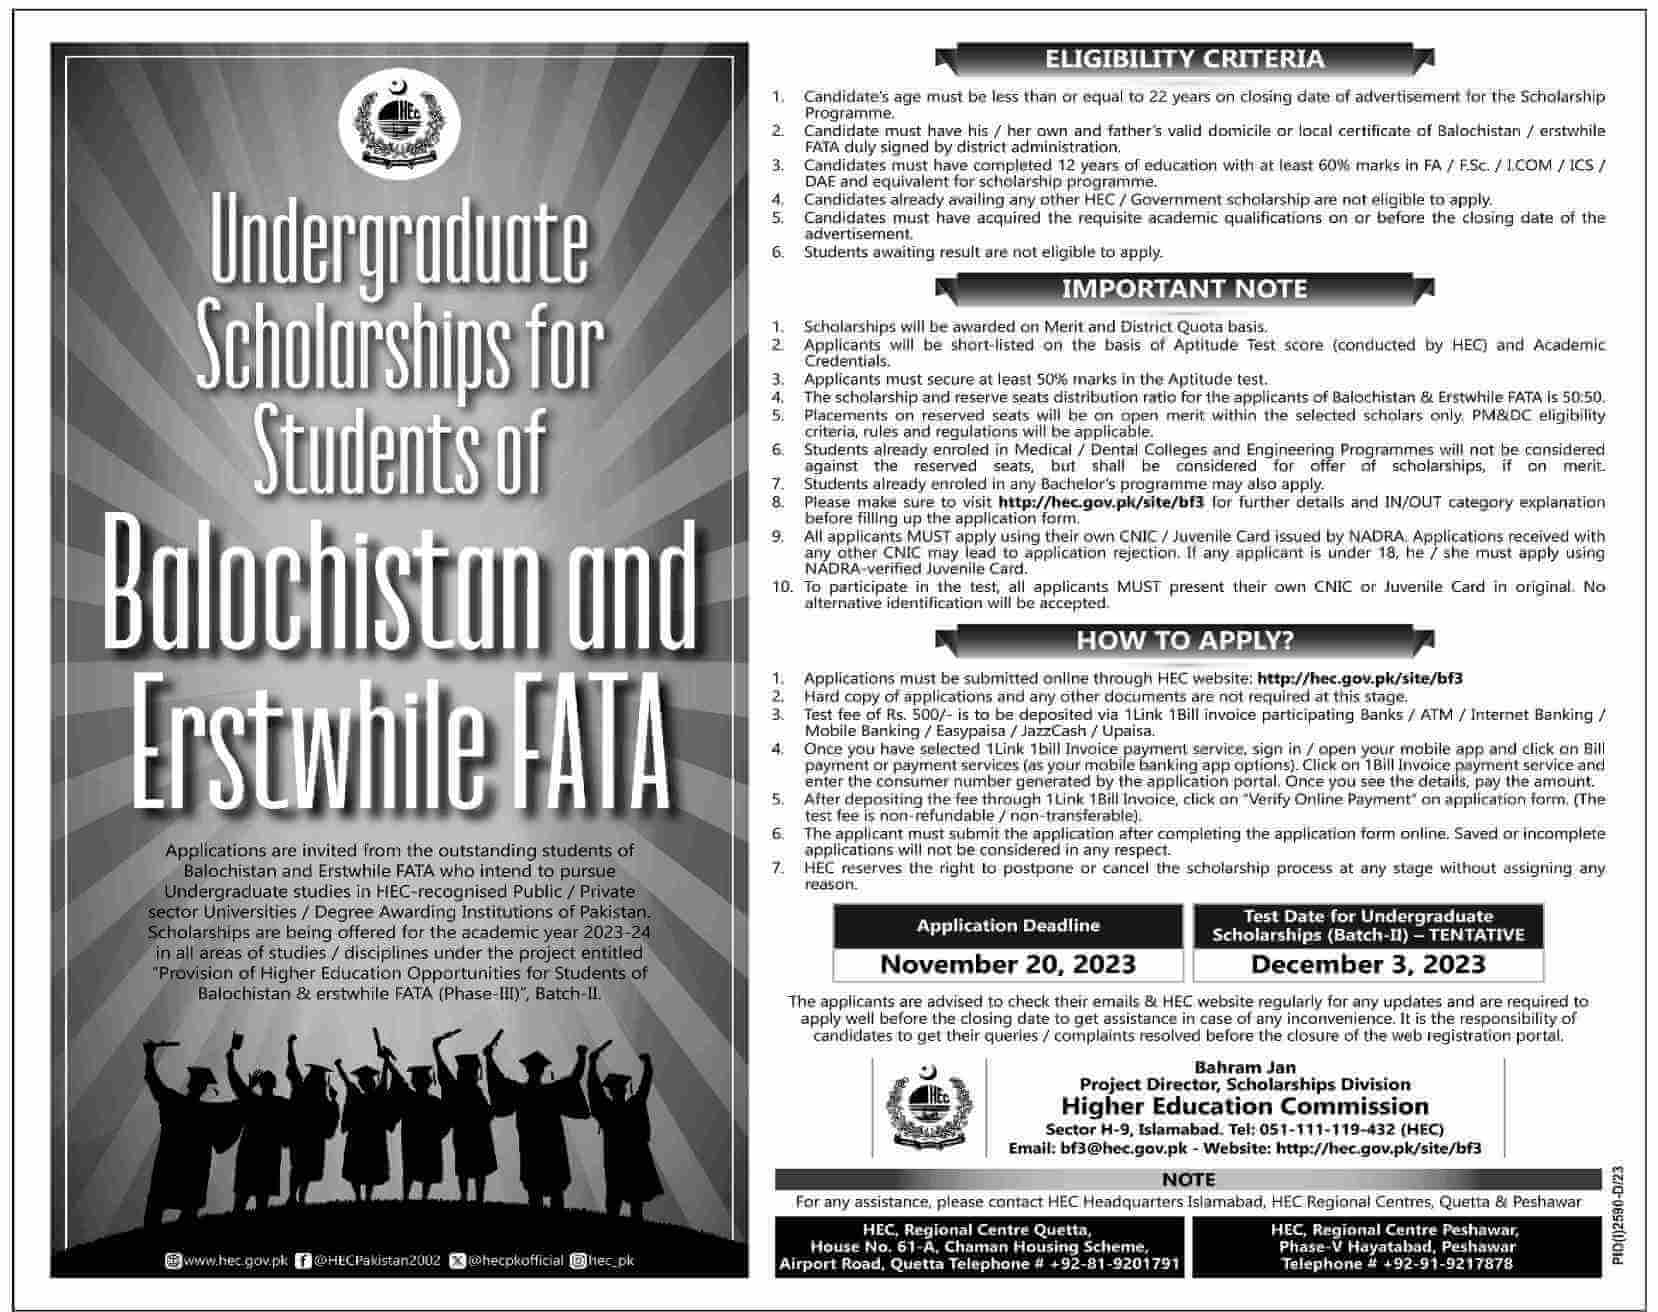 HEC Undergraduate Scholarship for Baluchistan ERSTILE FATA